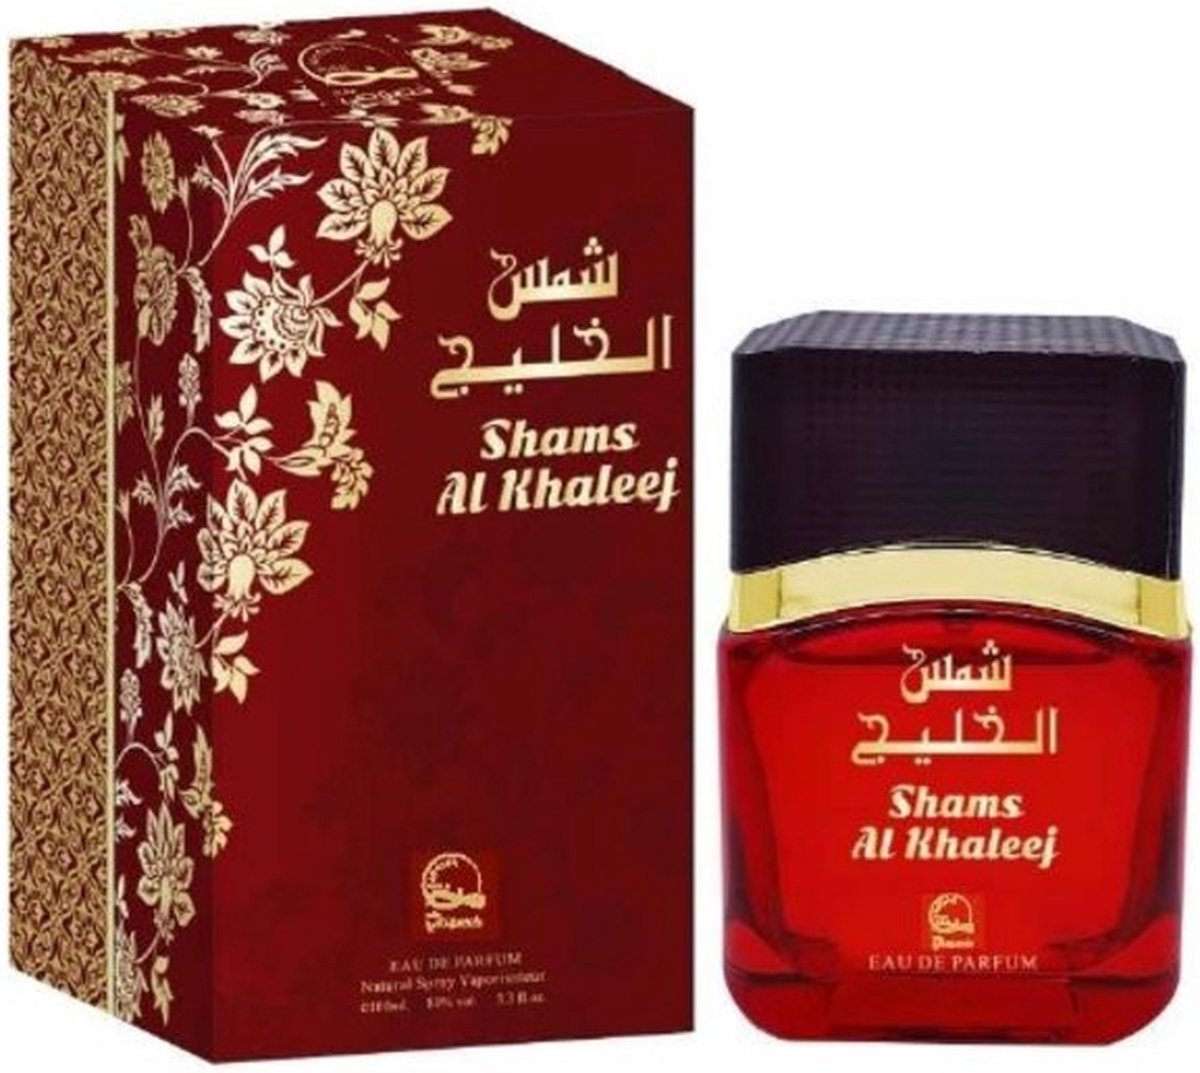 Shams Al Khaleej